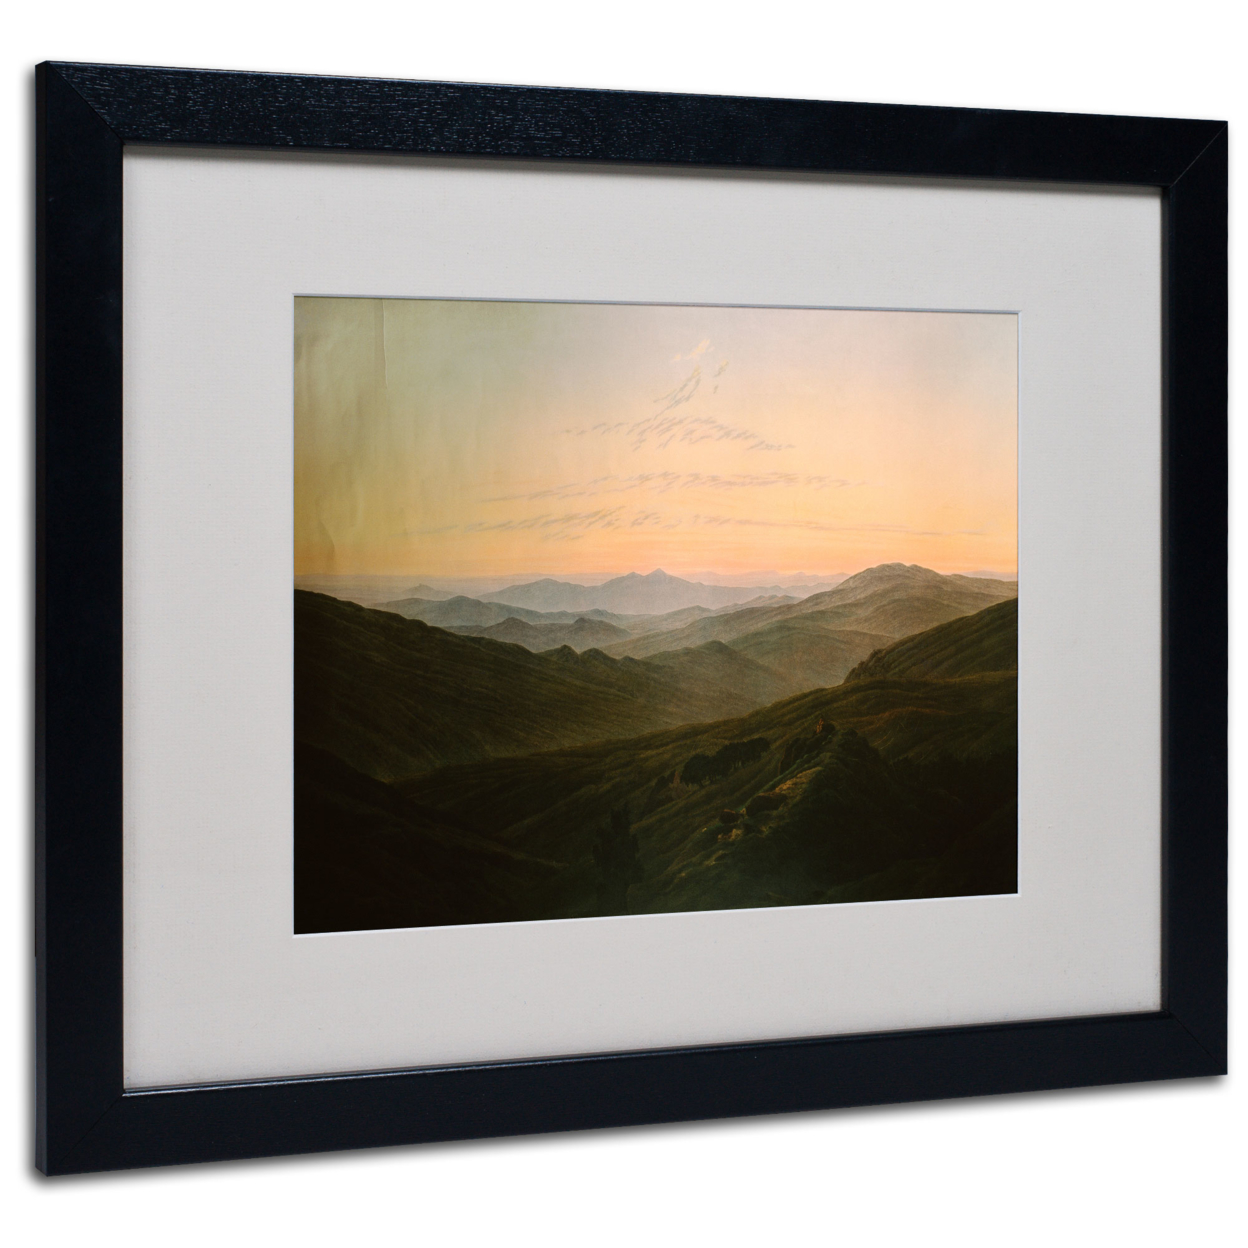 Caspar David Friedrich 'Dawn' Black Wooden Framed Art 18 X 22 Inches